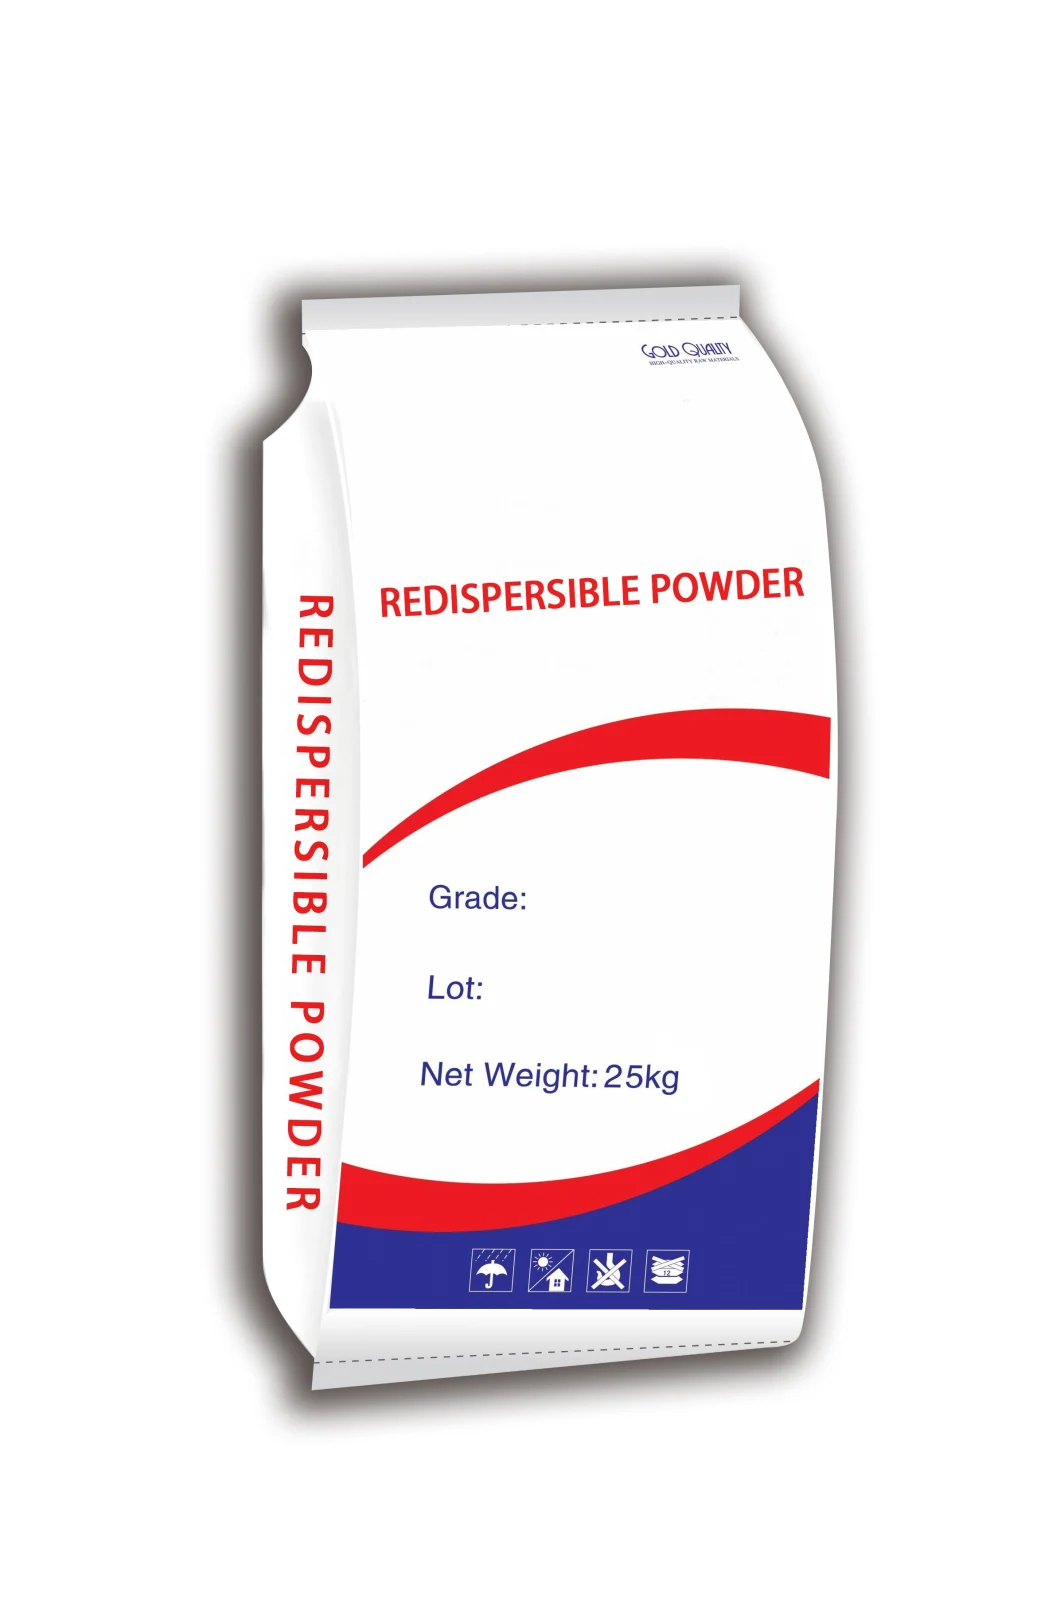 Construction Grade Redispersible Latex Powder Vae Rdp Manufacturer